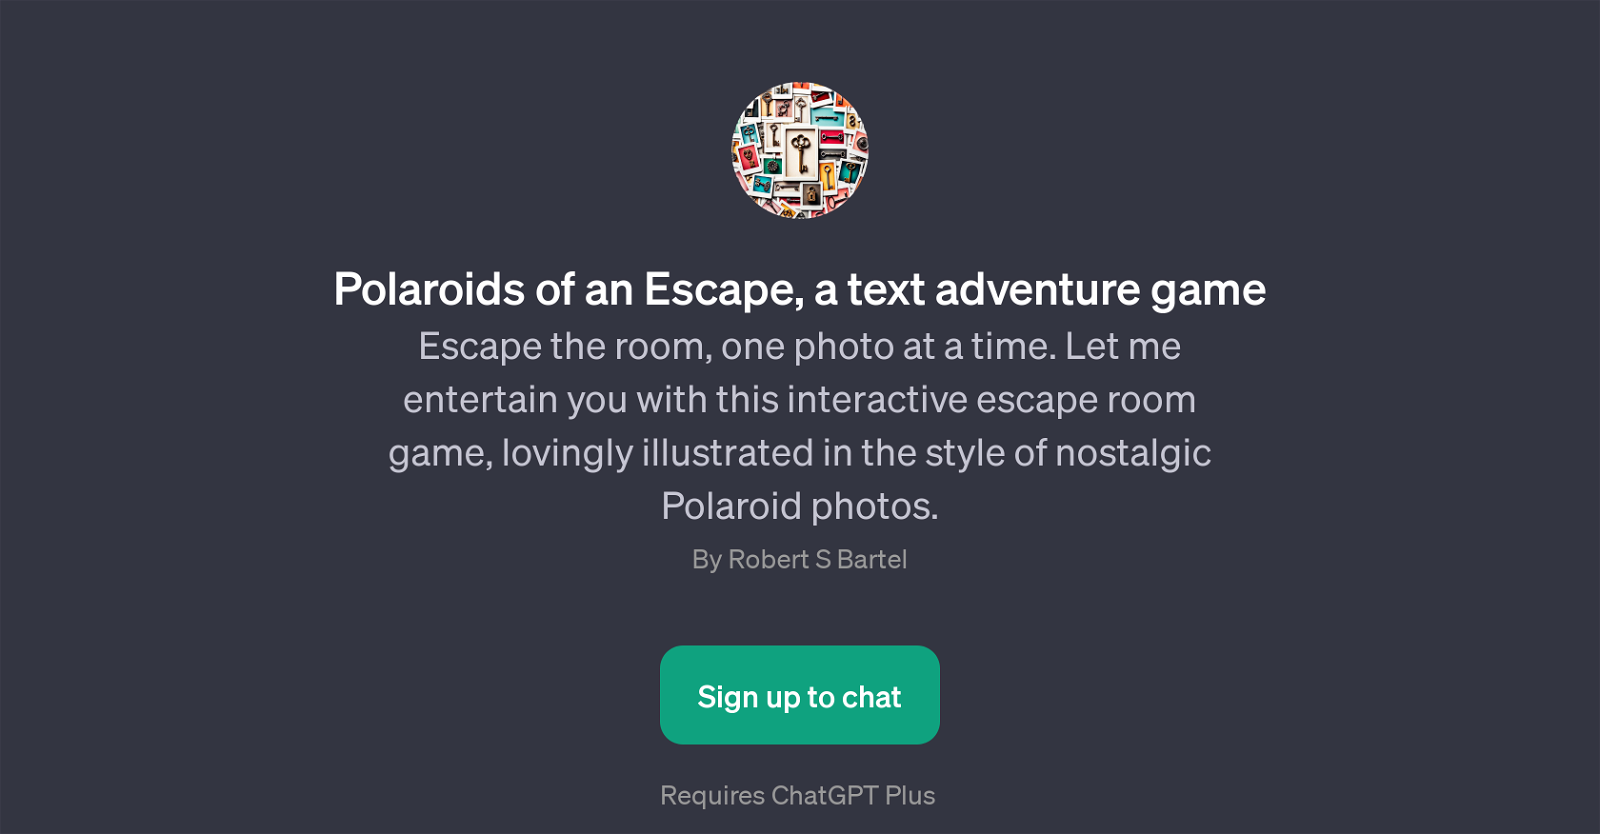 Polaroids of an Escape website